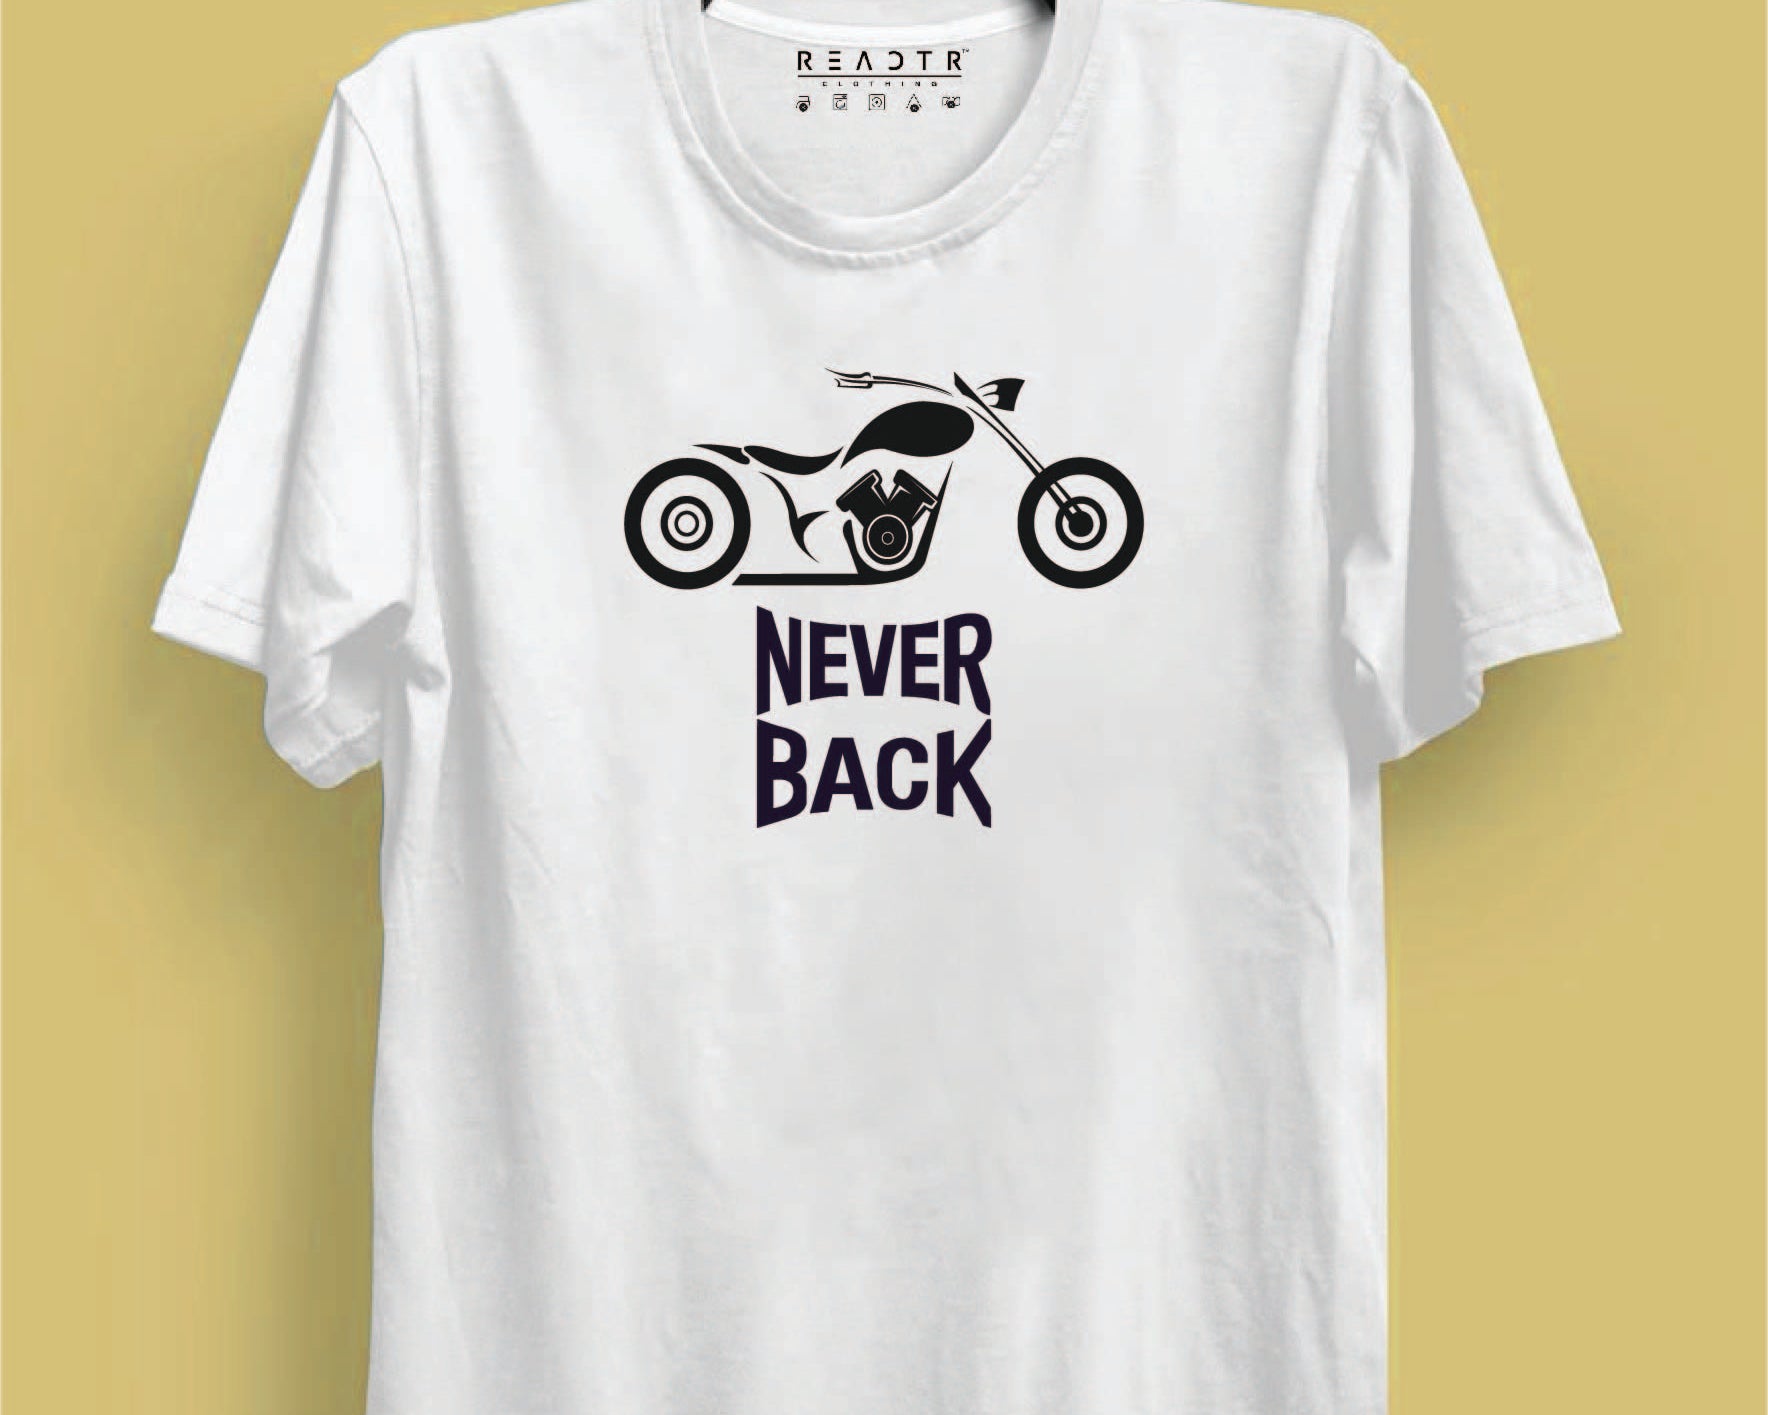 Never Look Back Reactr Tshirts For Men - Eyewearlabs